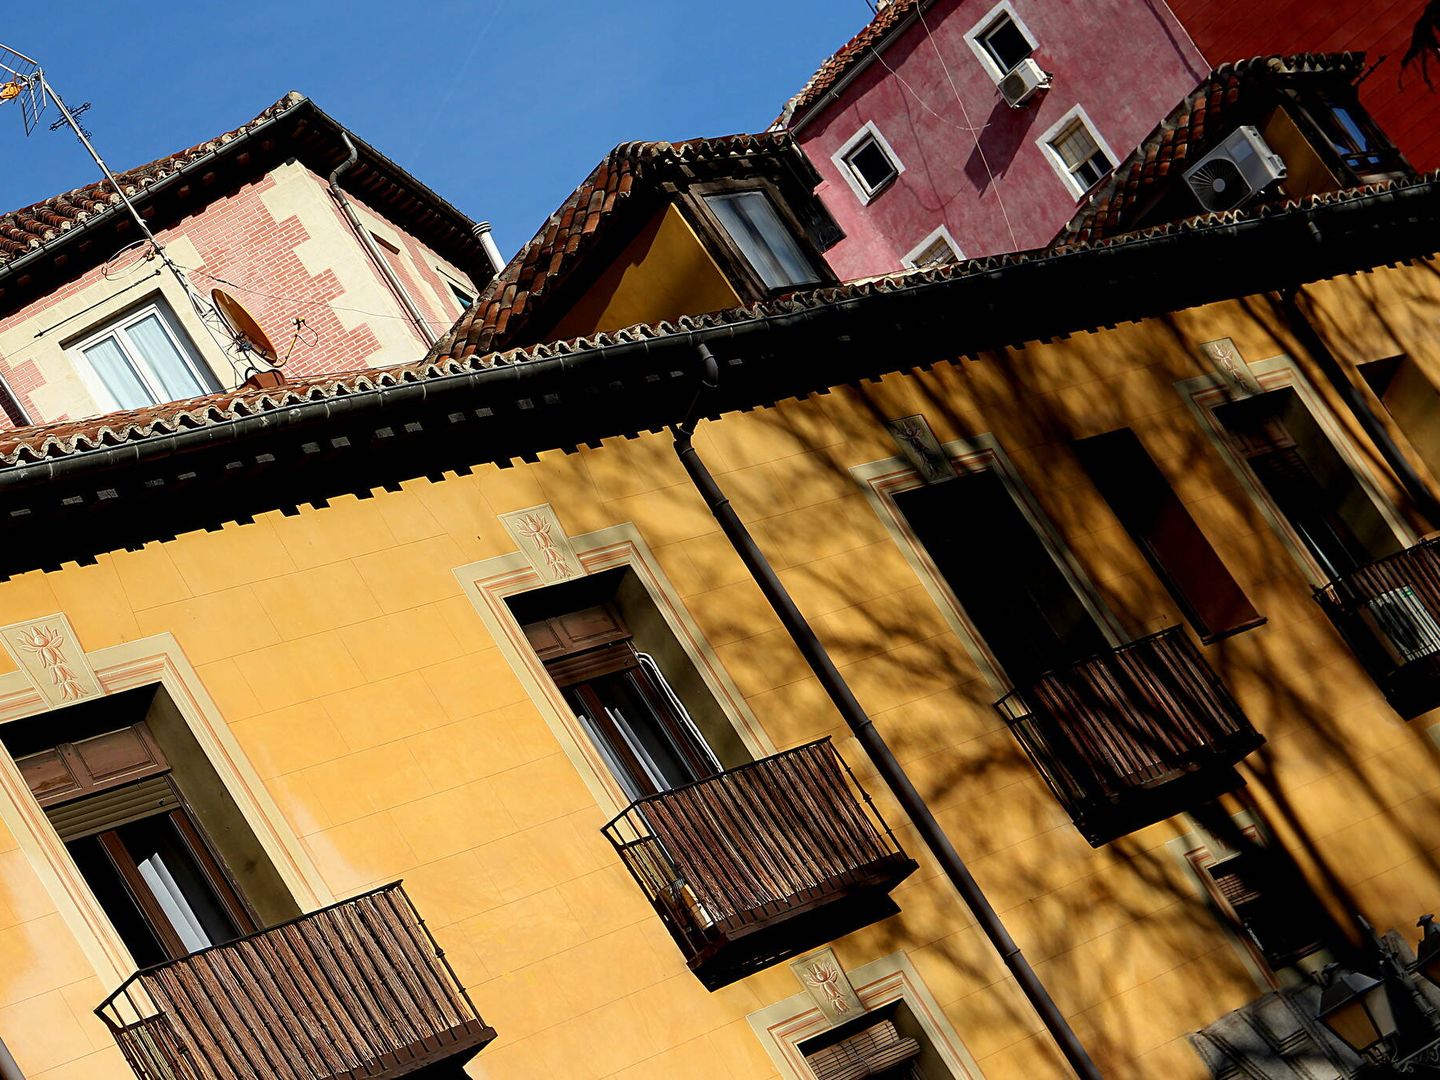 Las casas a la malicia de la calle Segovia. (CC/Augusto Gomes)